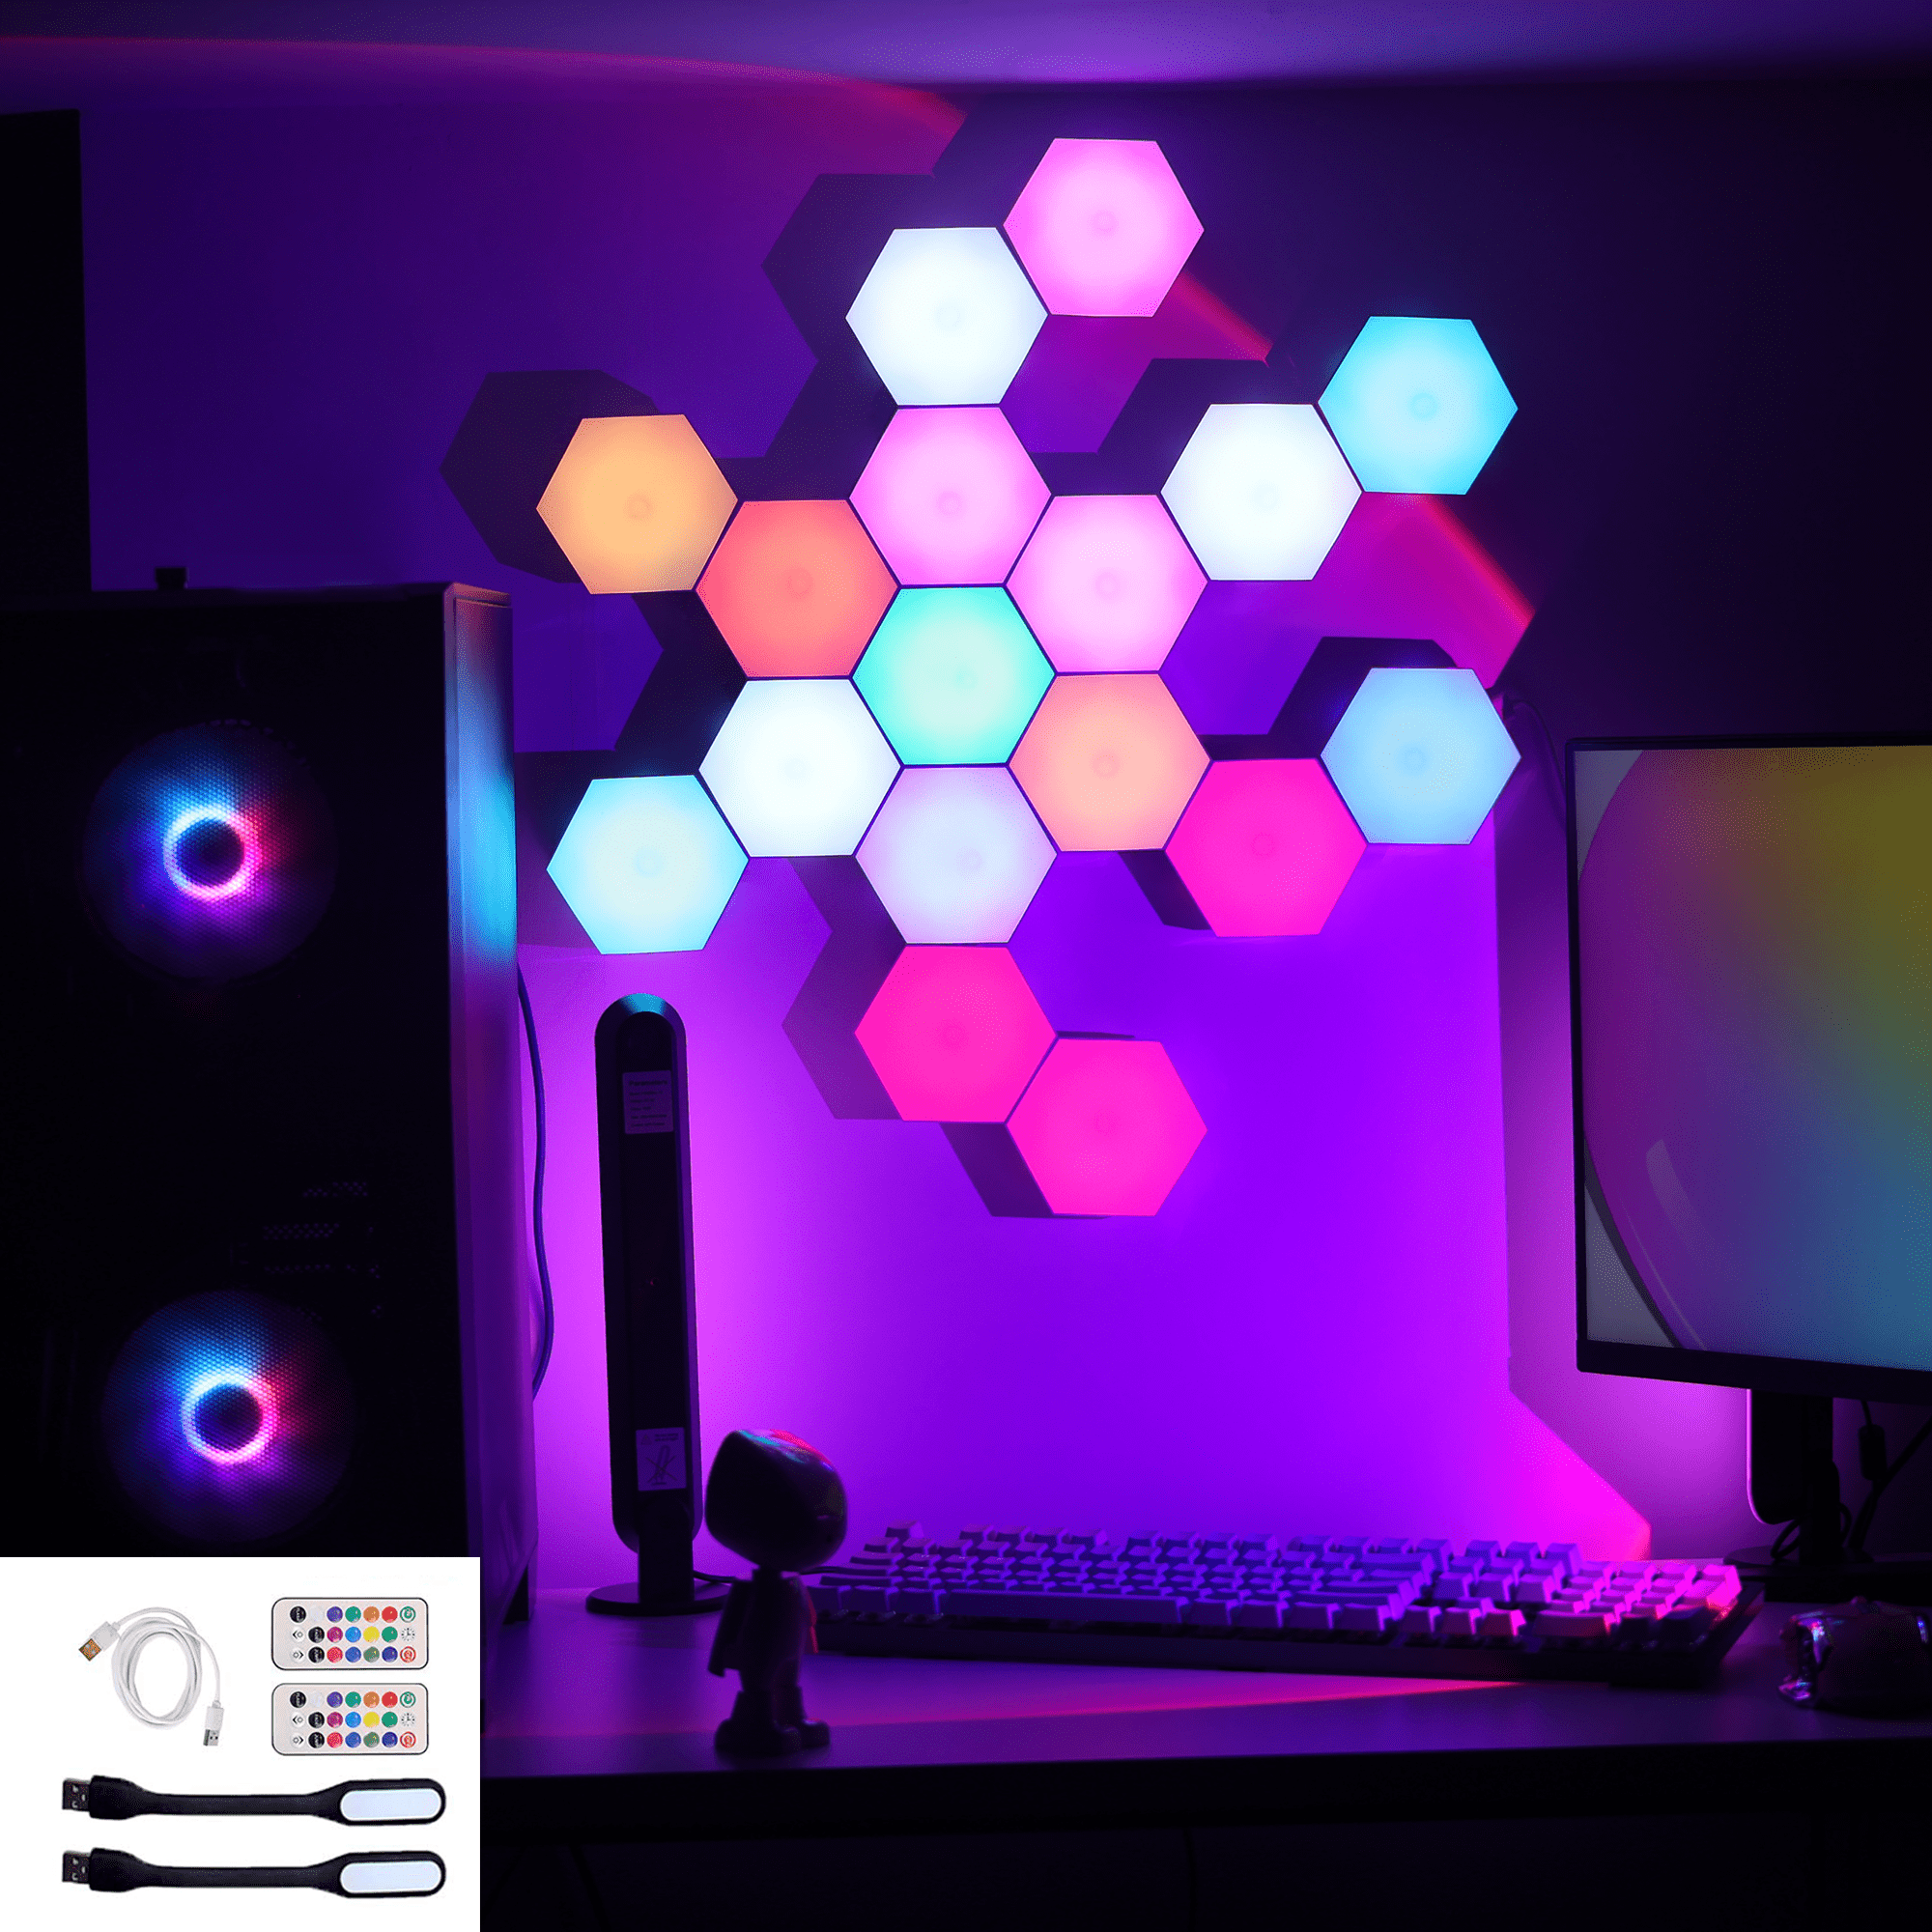 hexagon lights for gaming room, led gaming setup - okgo.net